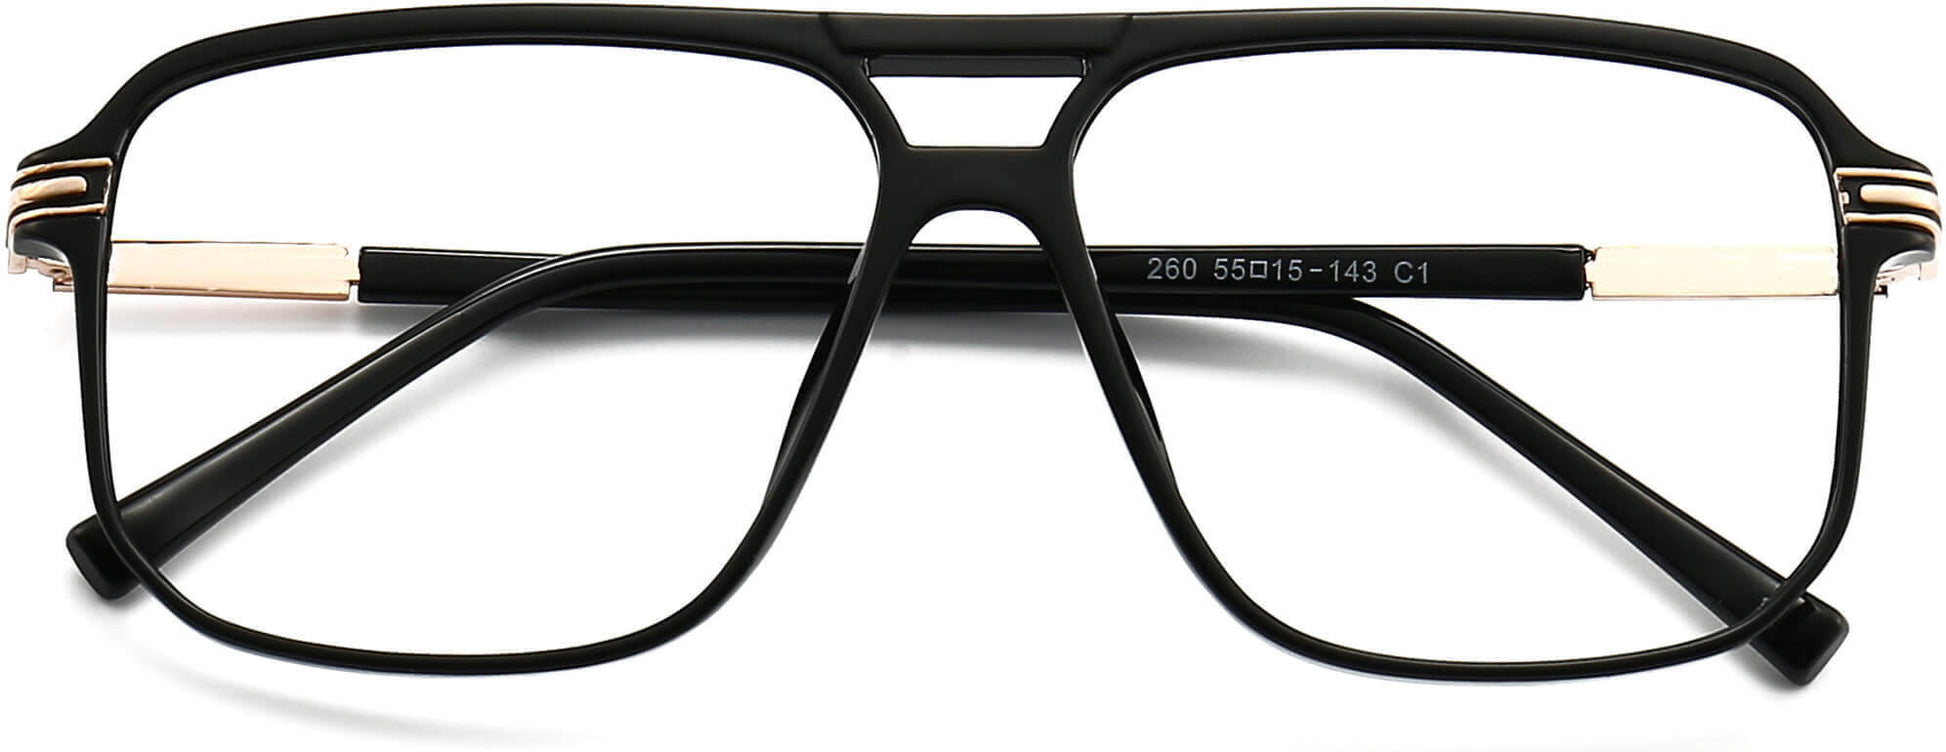 Benjamin Square Black Eyeglasses from ANRRI, closed view